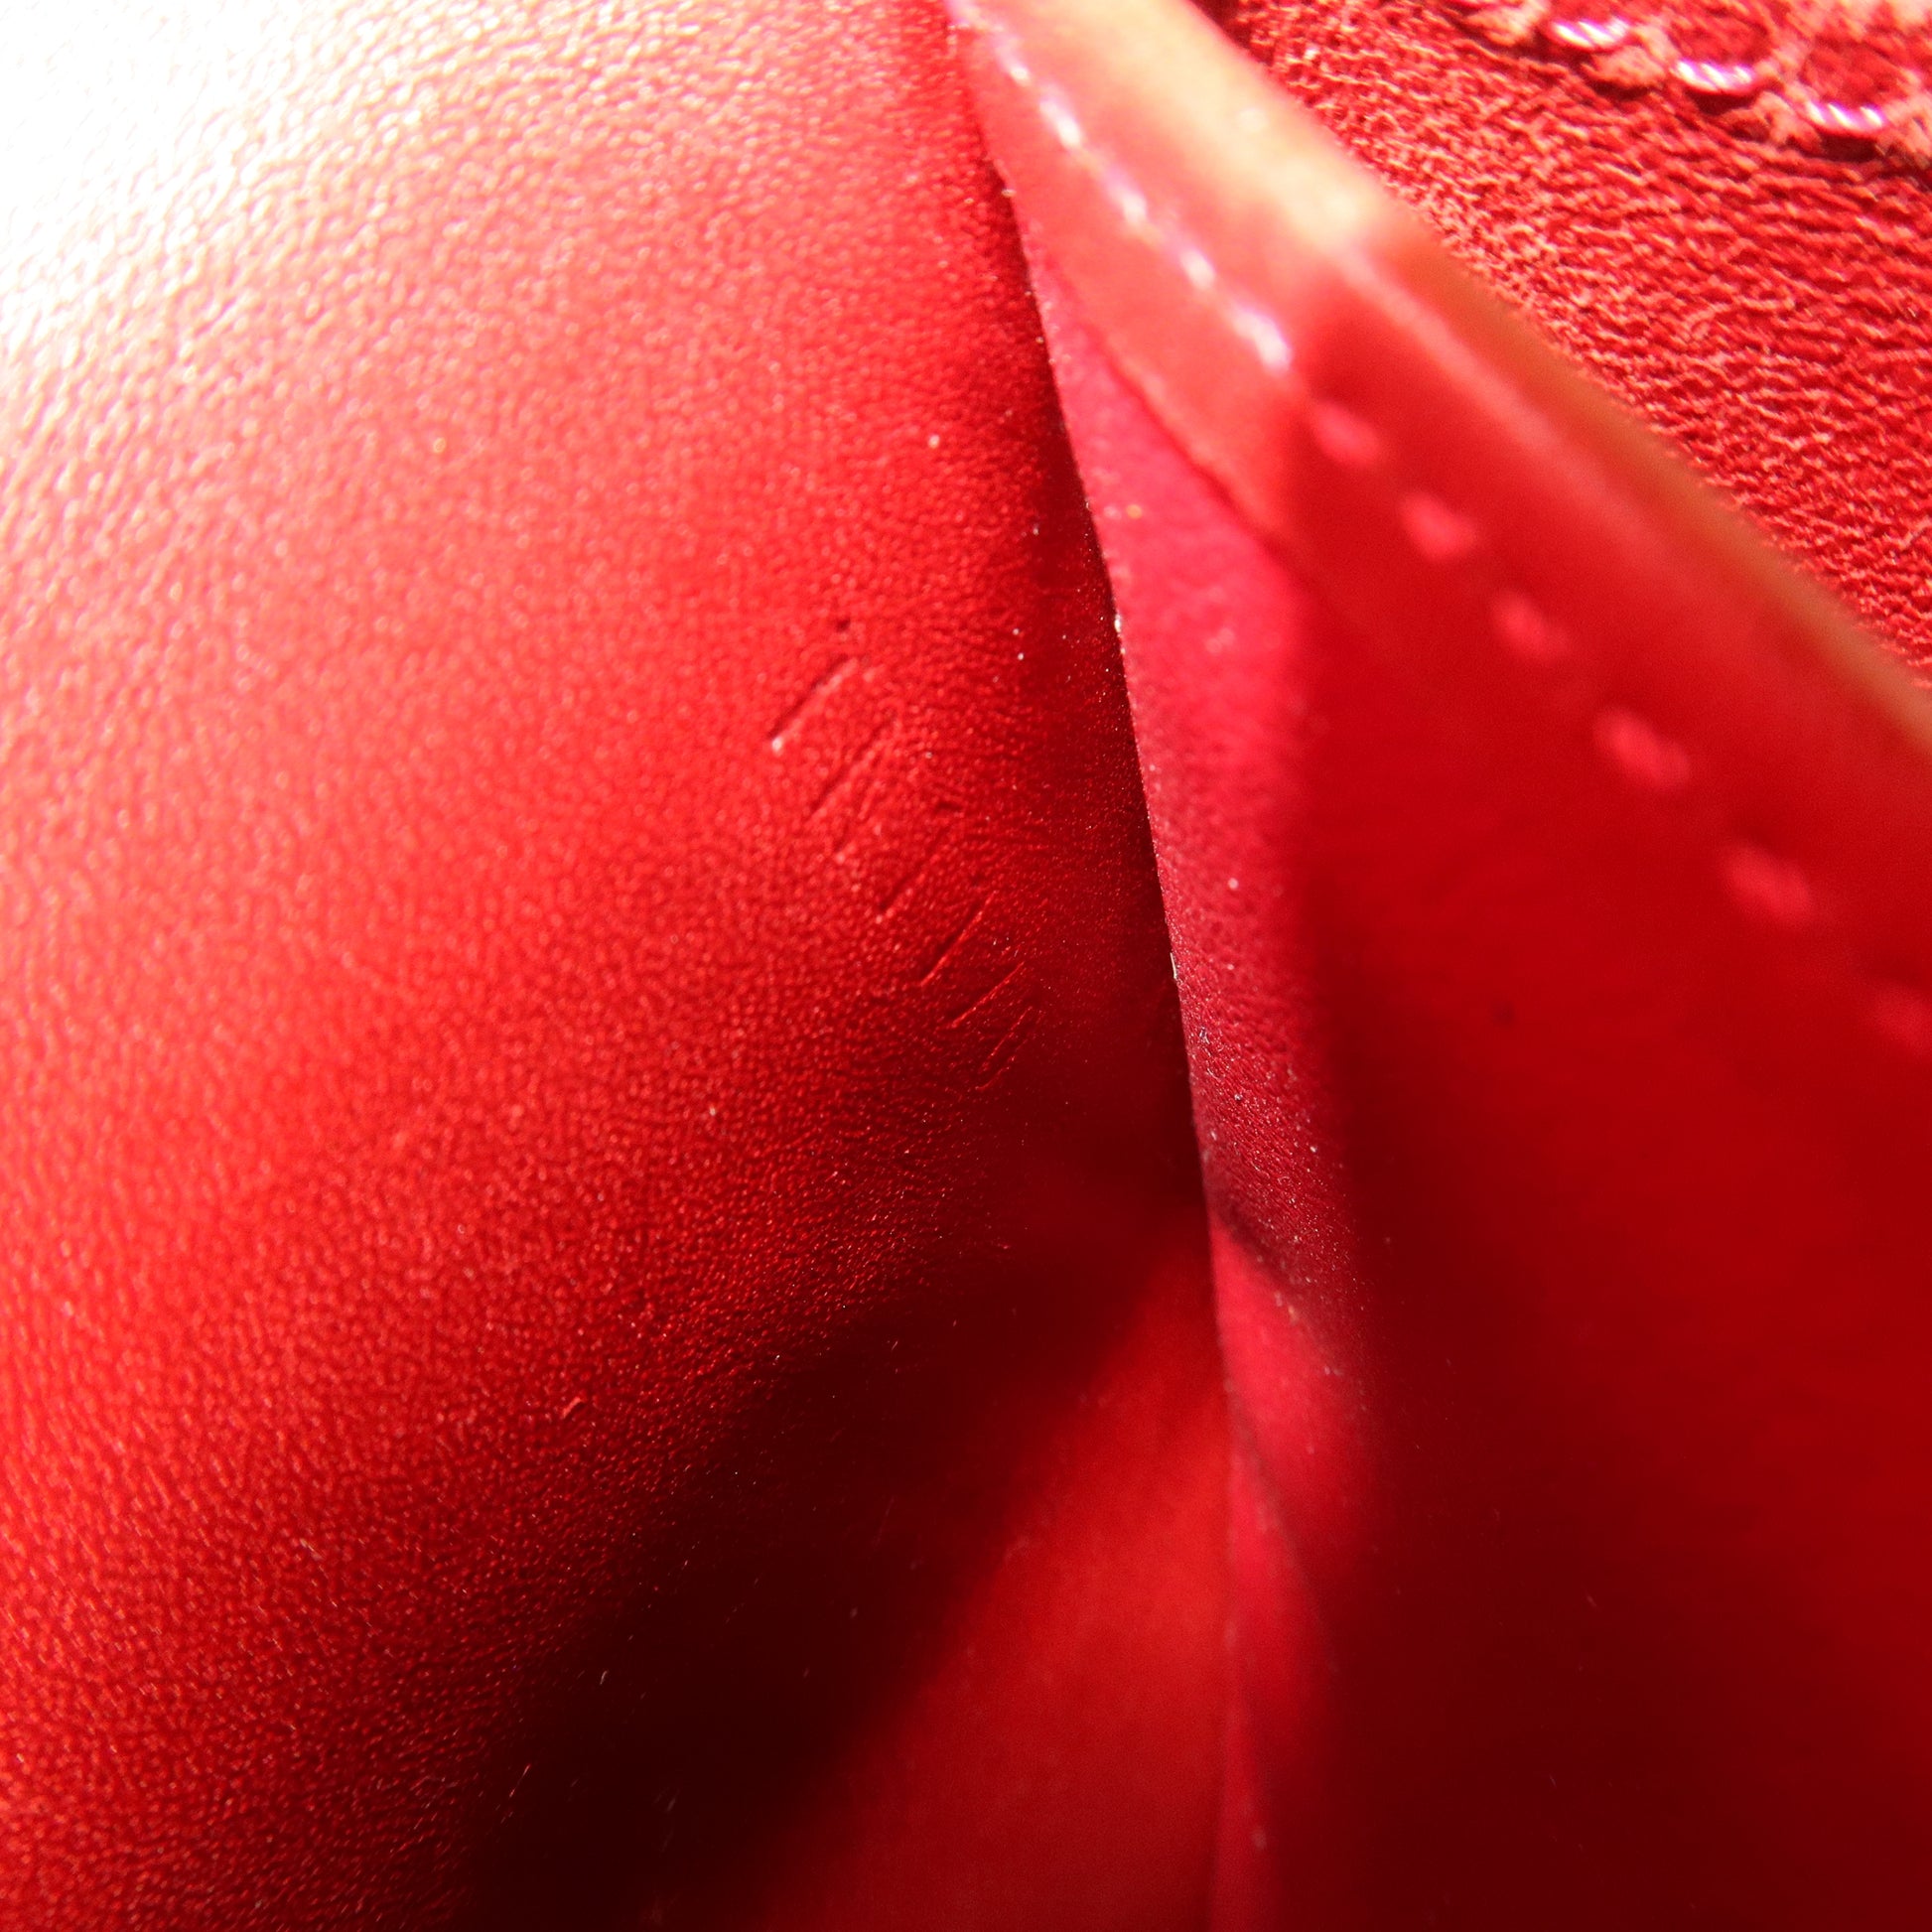 Louis Vuitton red black vernis wallet set